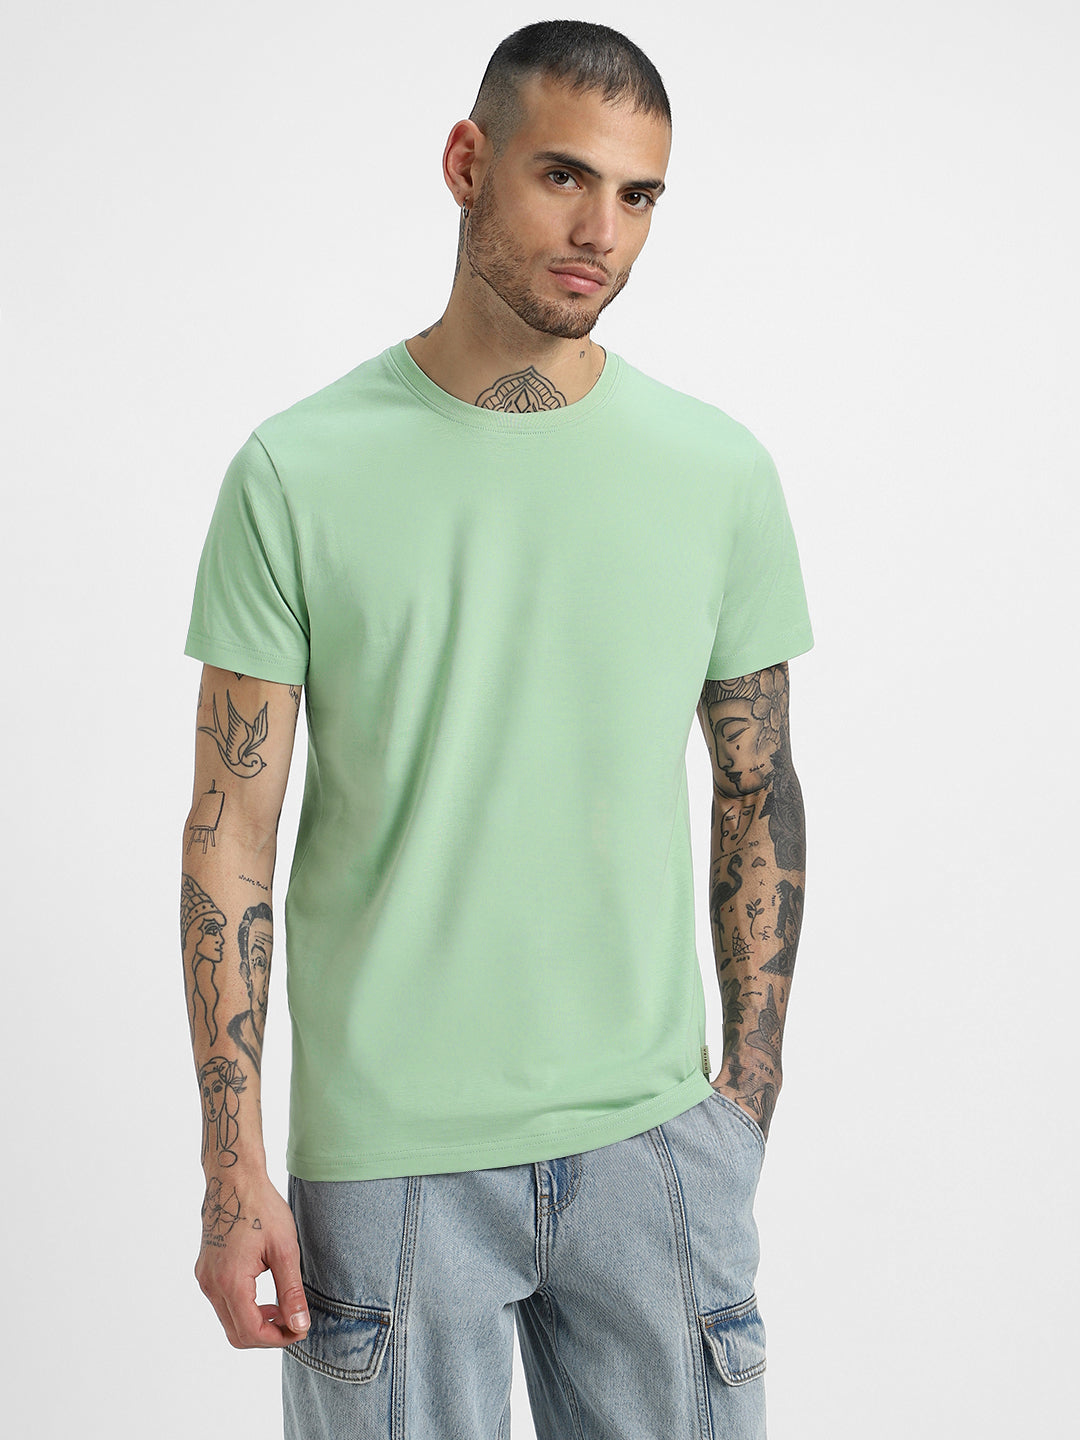 Fog Green Solid Men's Tshirt